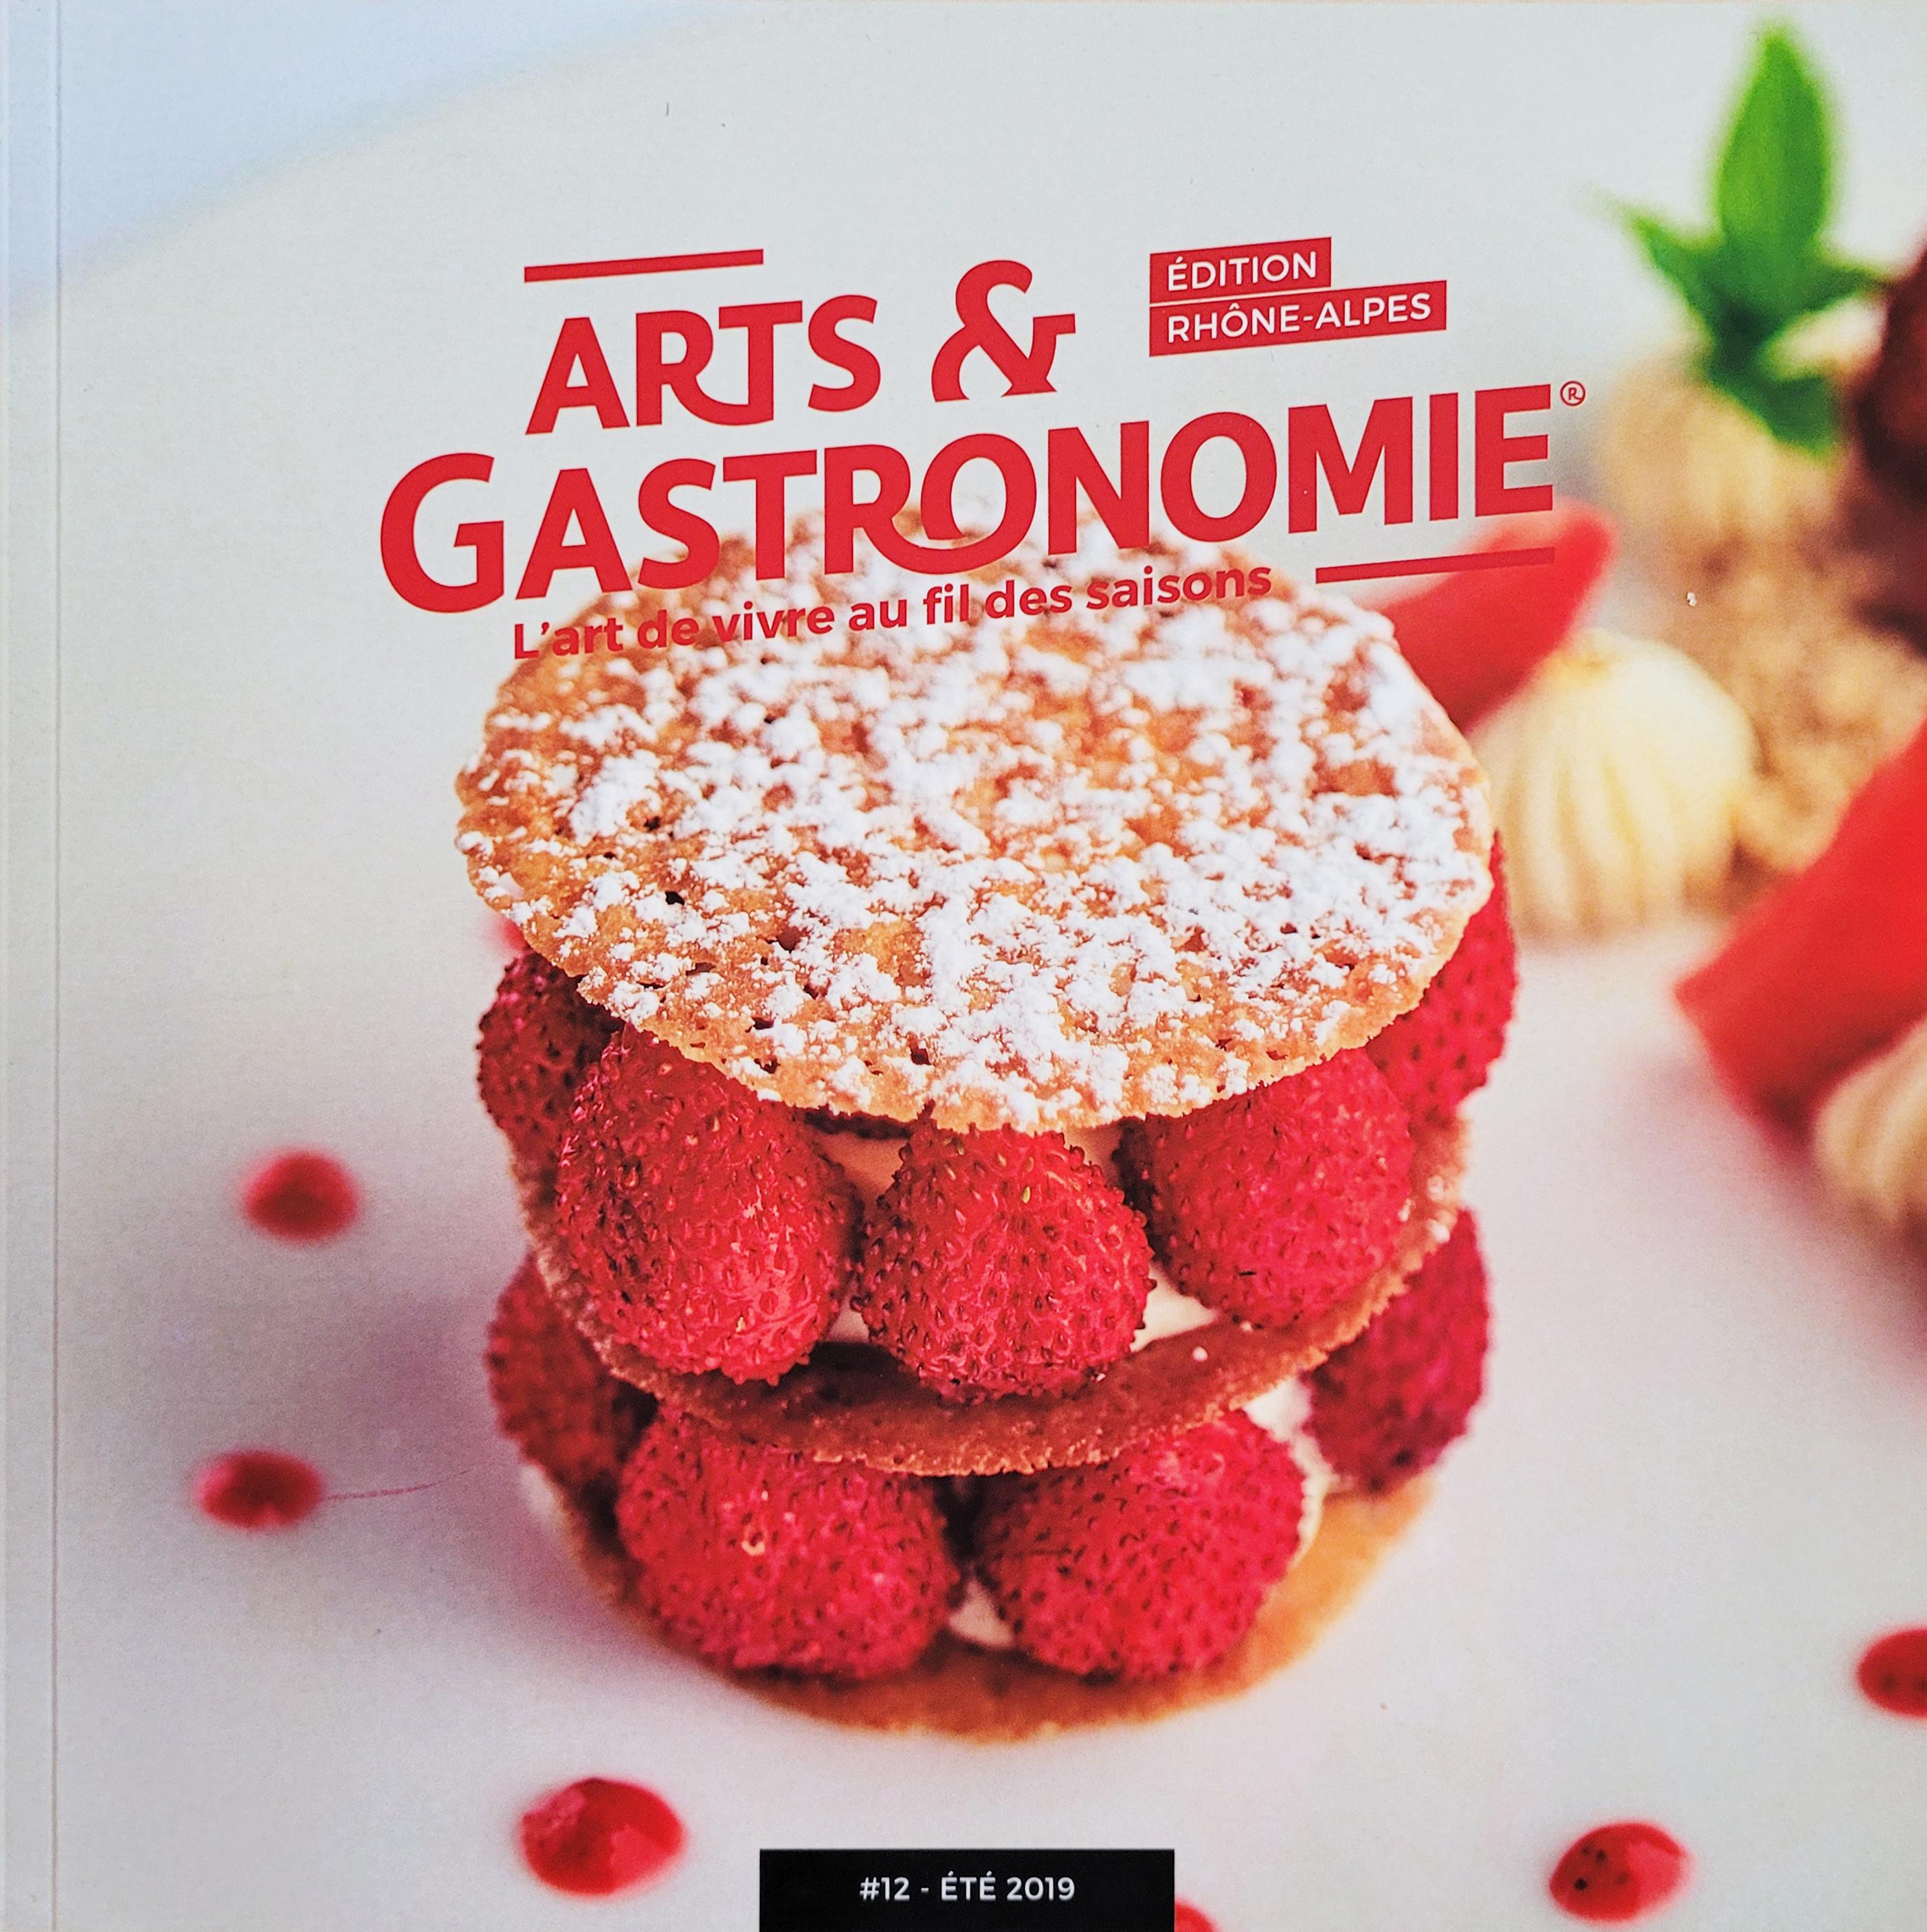 Arts & gastronomie